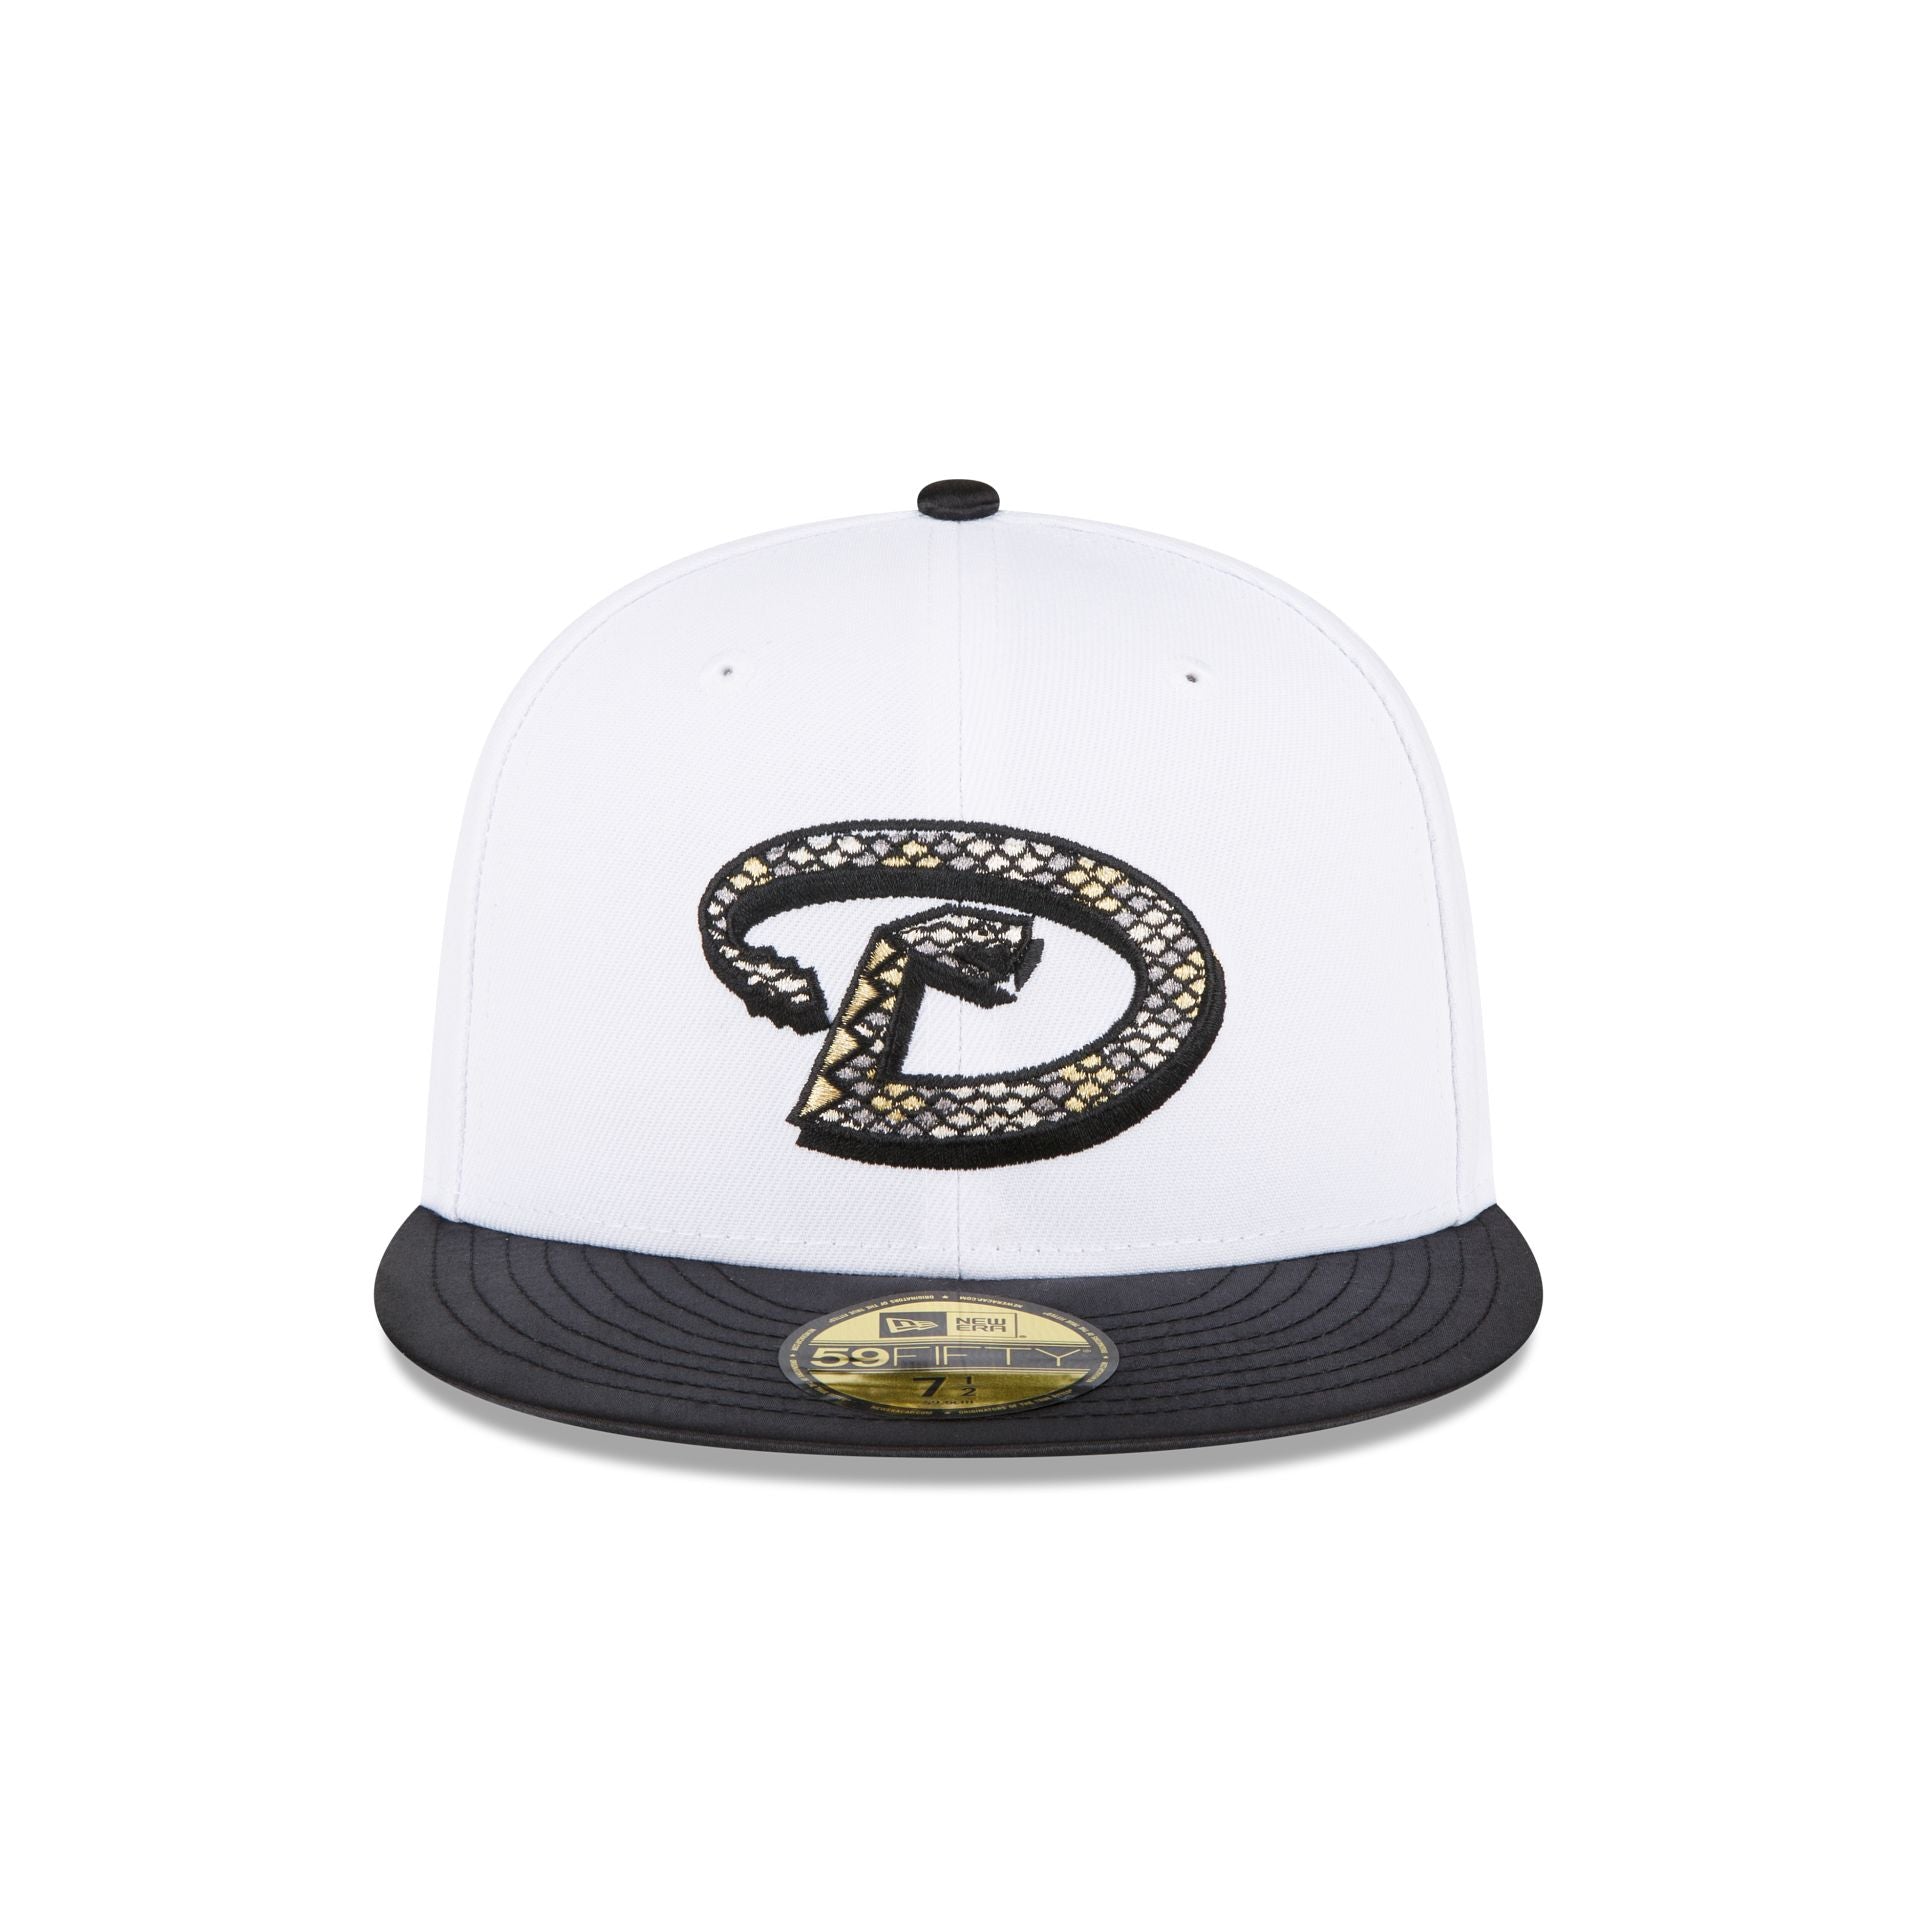 Las Vegas Raiders Fitted New Era 59FIFTY NL Logo Charcoal Black Hat Cap